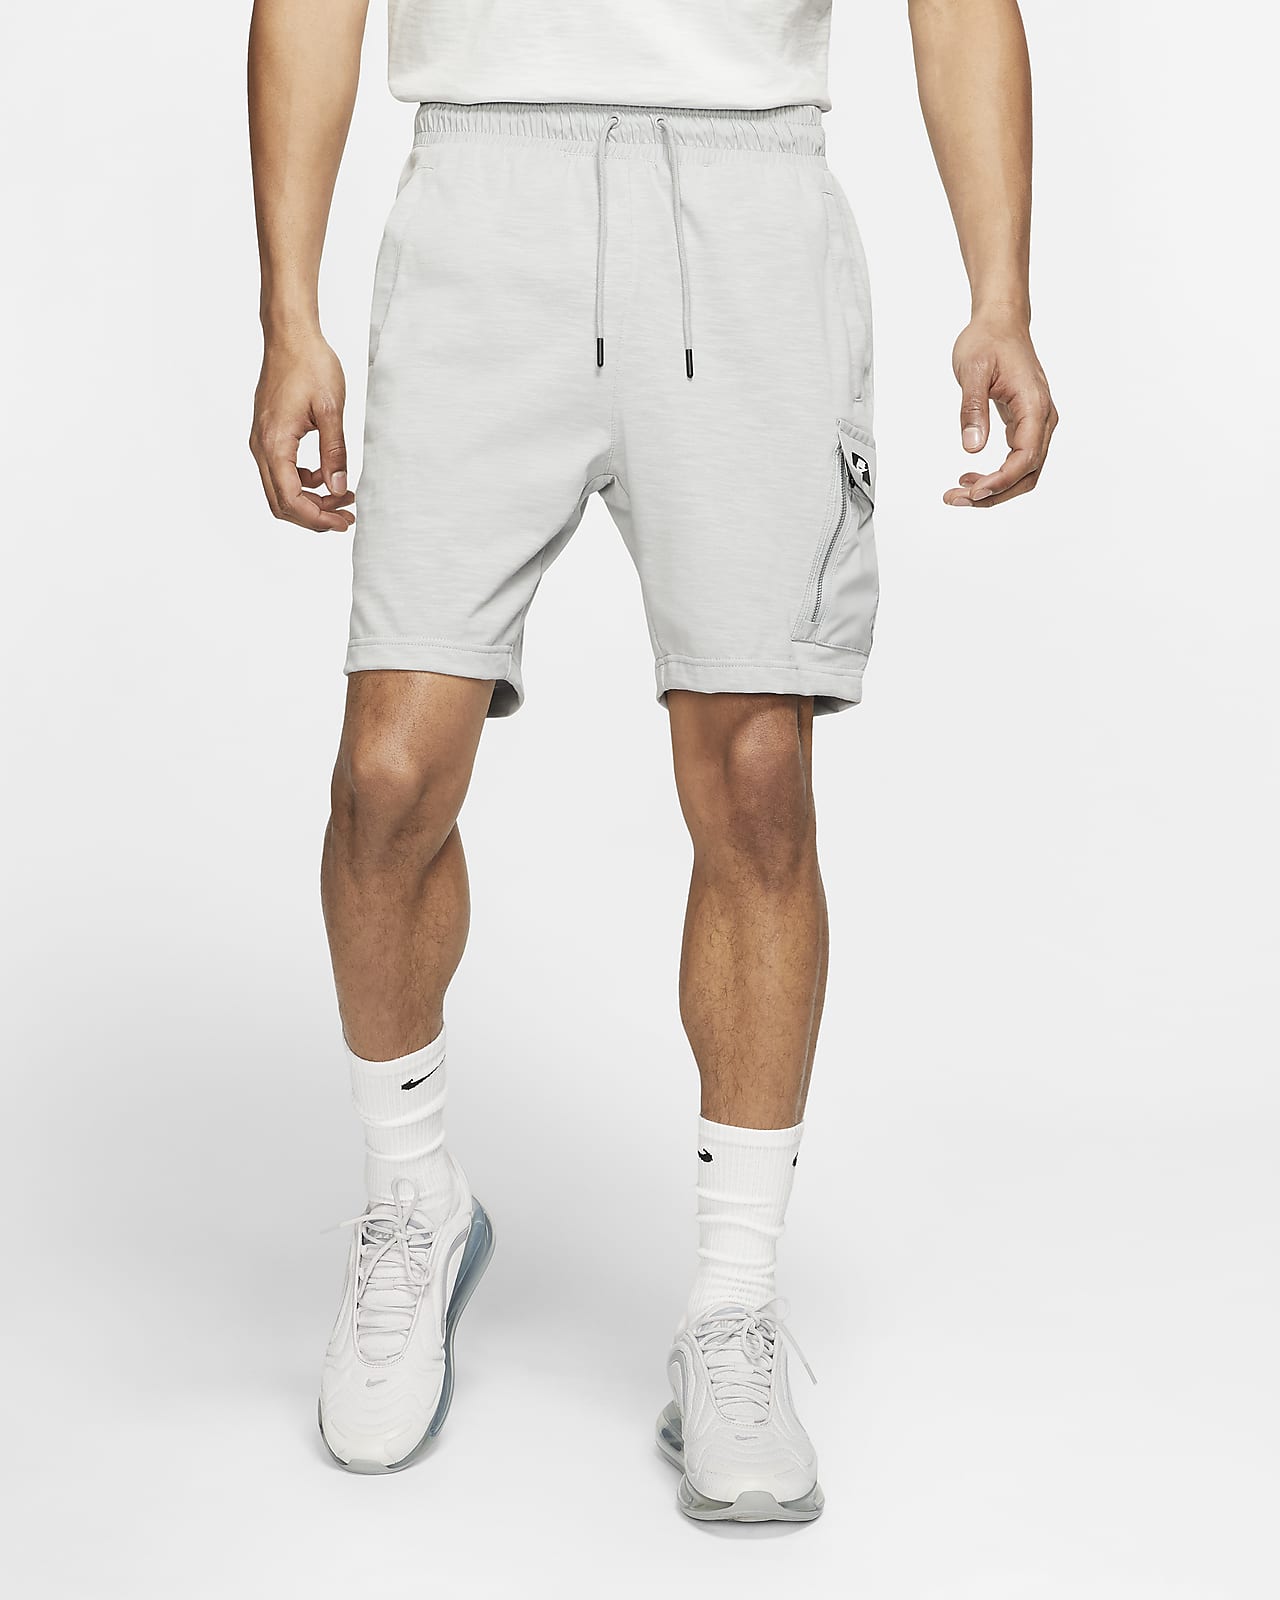 Nike Sportswear Men's Shorts. Nike SG